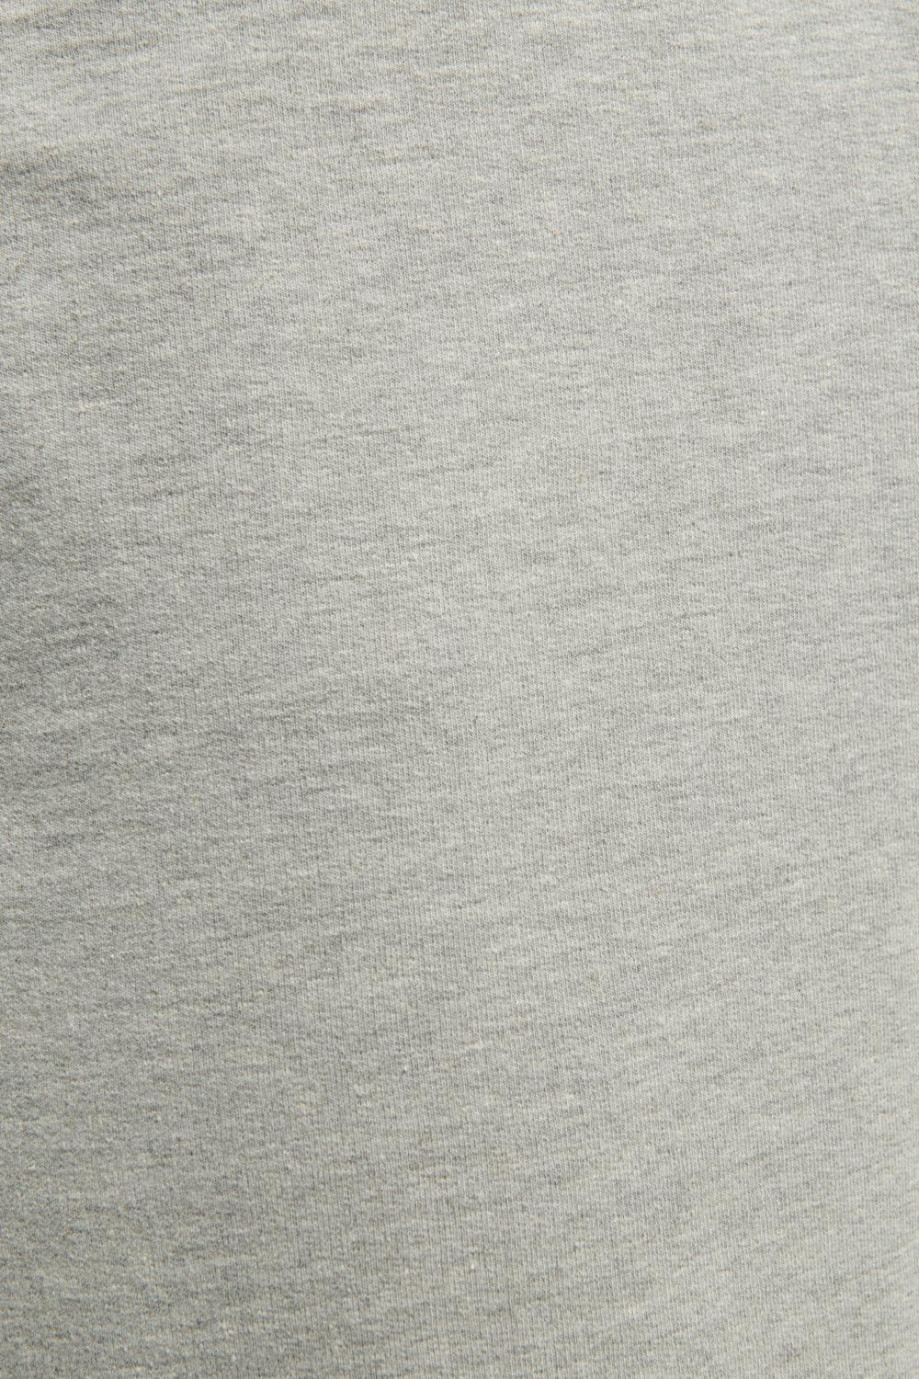 Pantalón jogger gris claro con elástico en bota y bolsillos